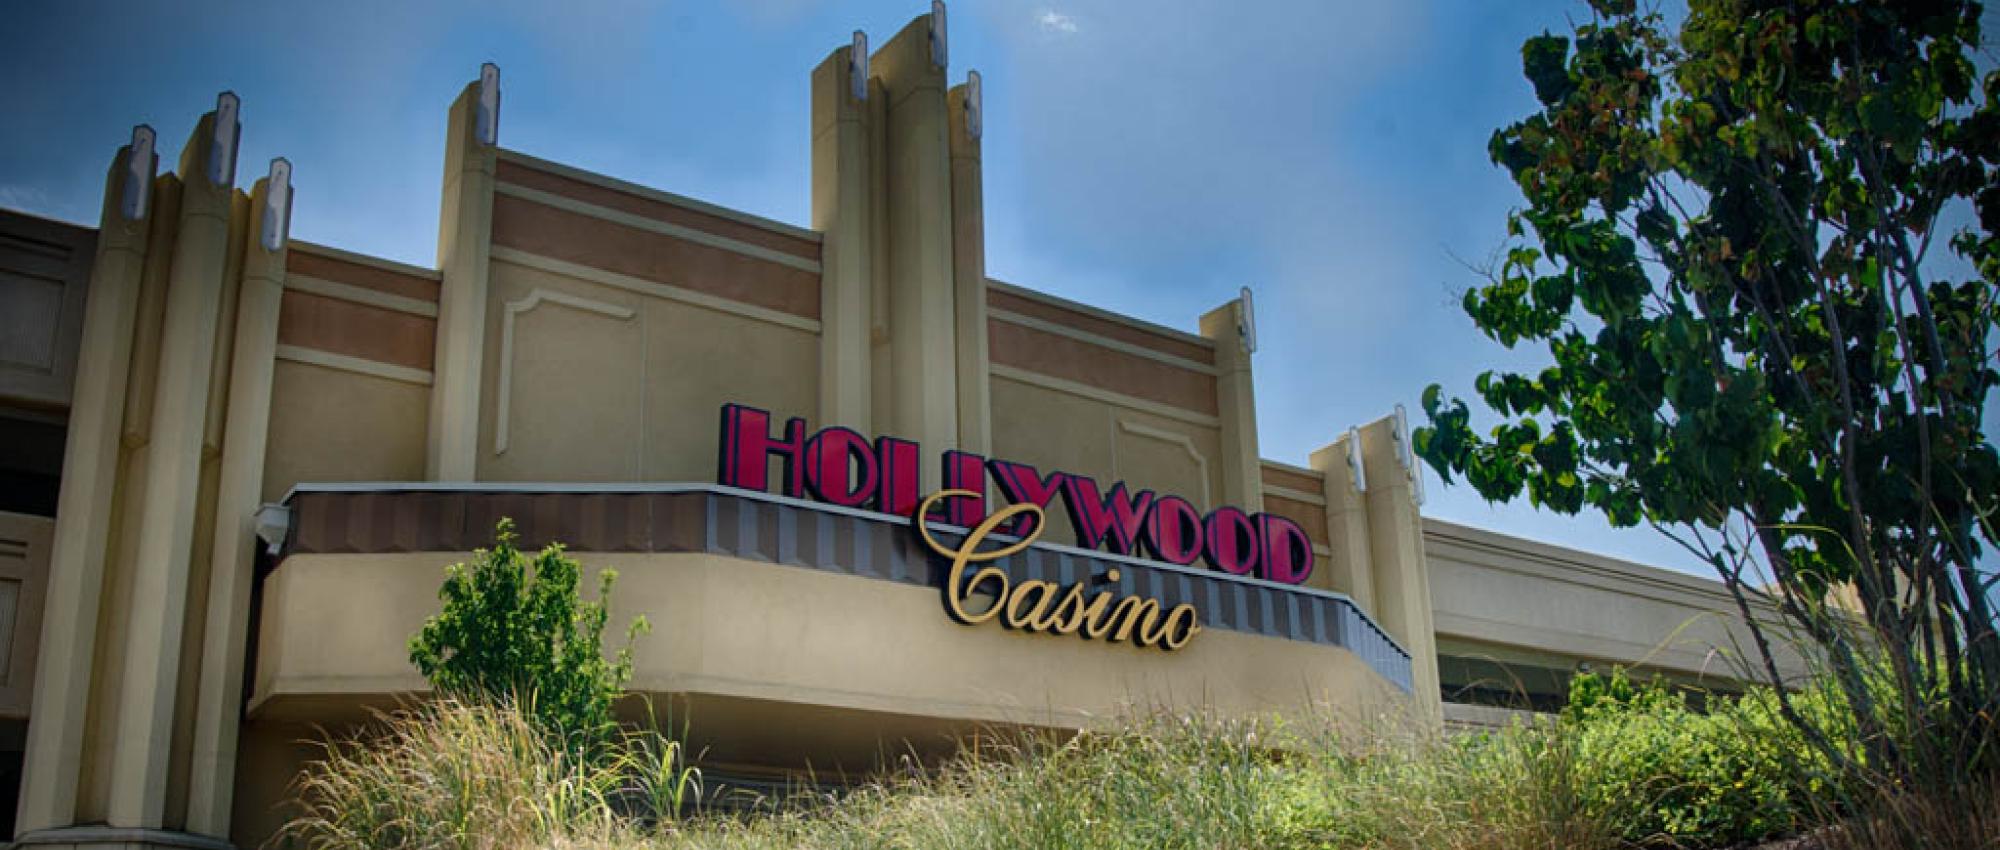 hollywood casino near hershey pa